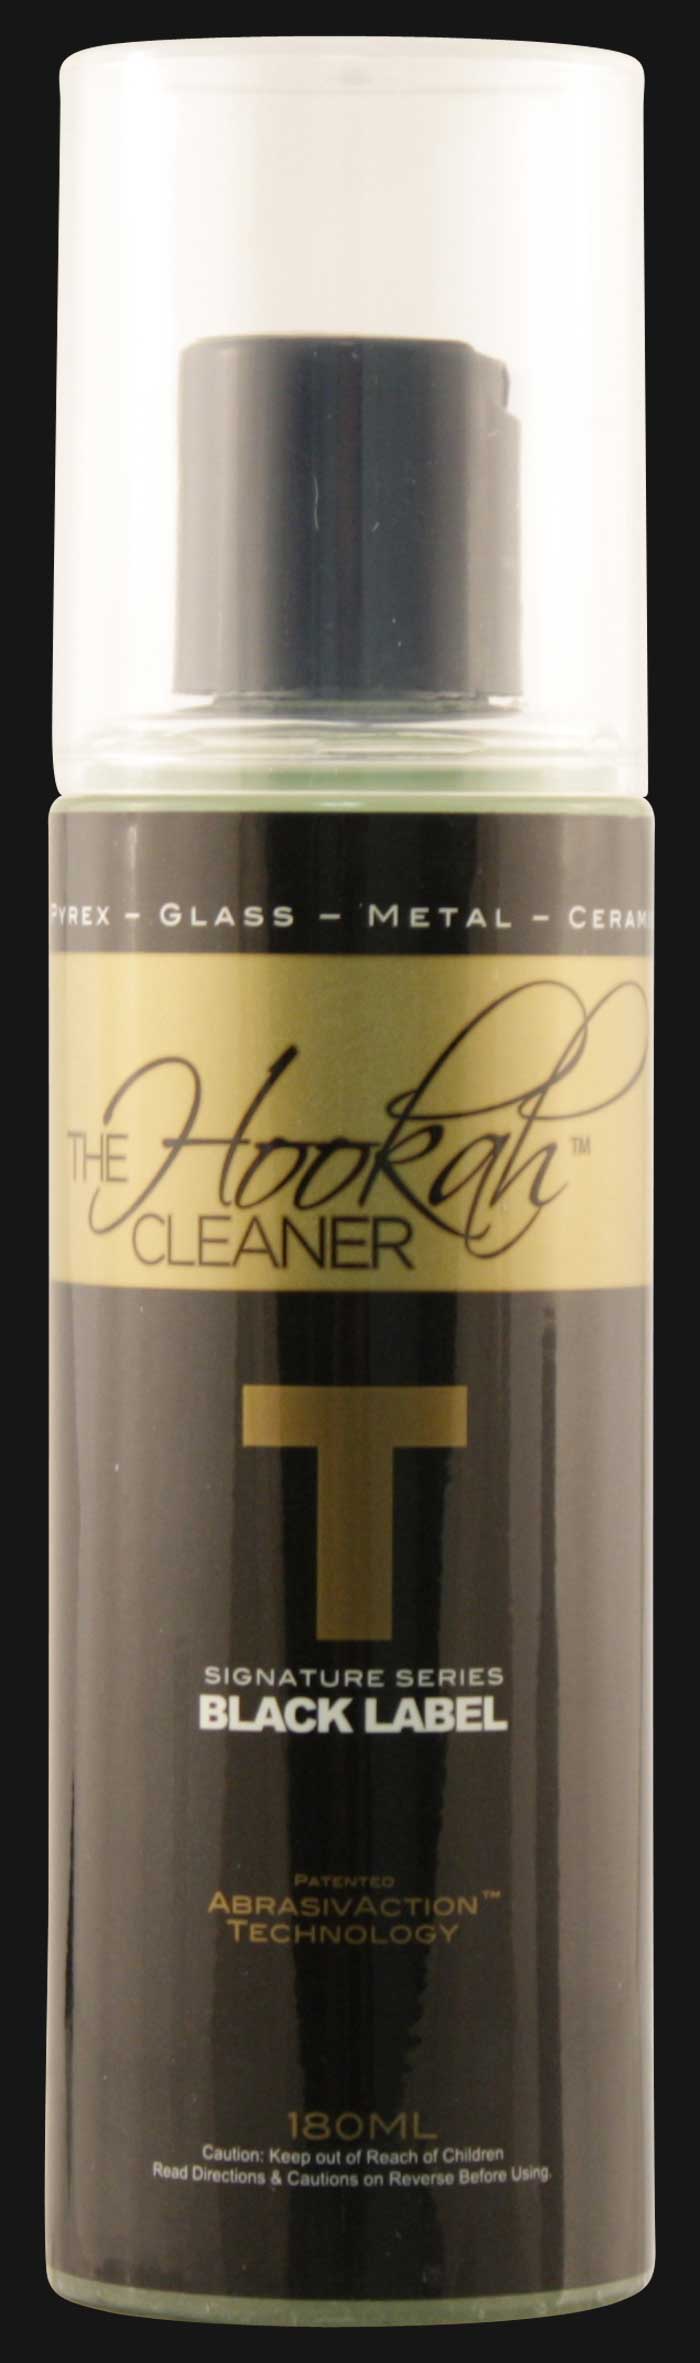 The Hookah Cleaner Black Label T